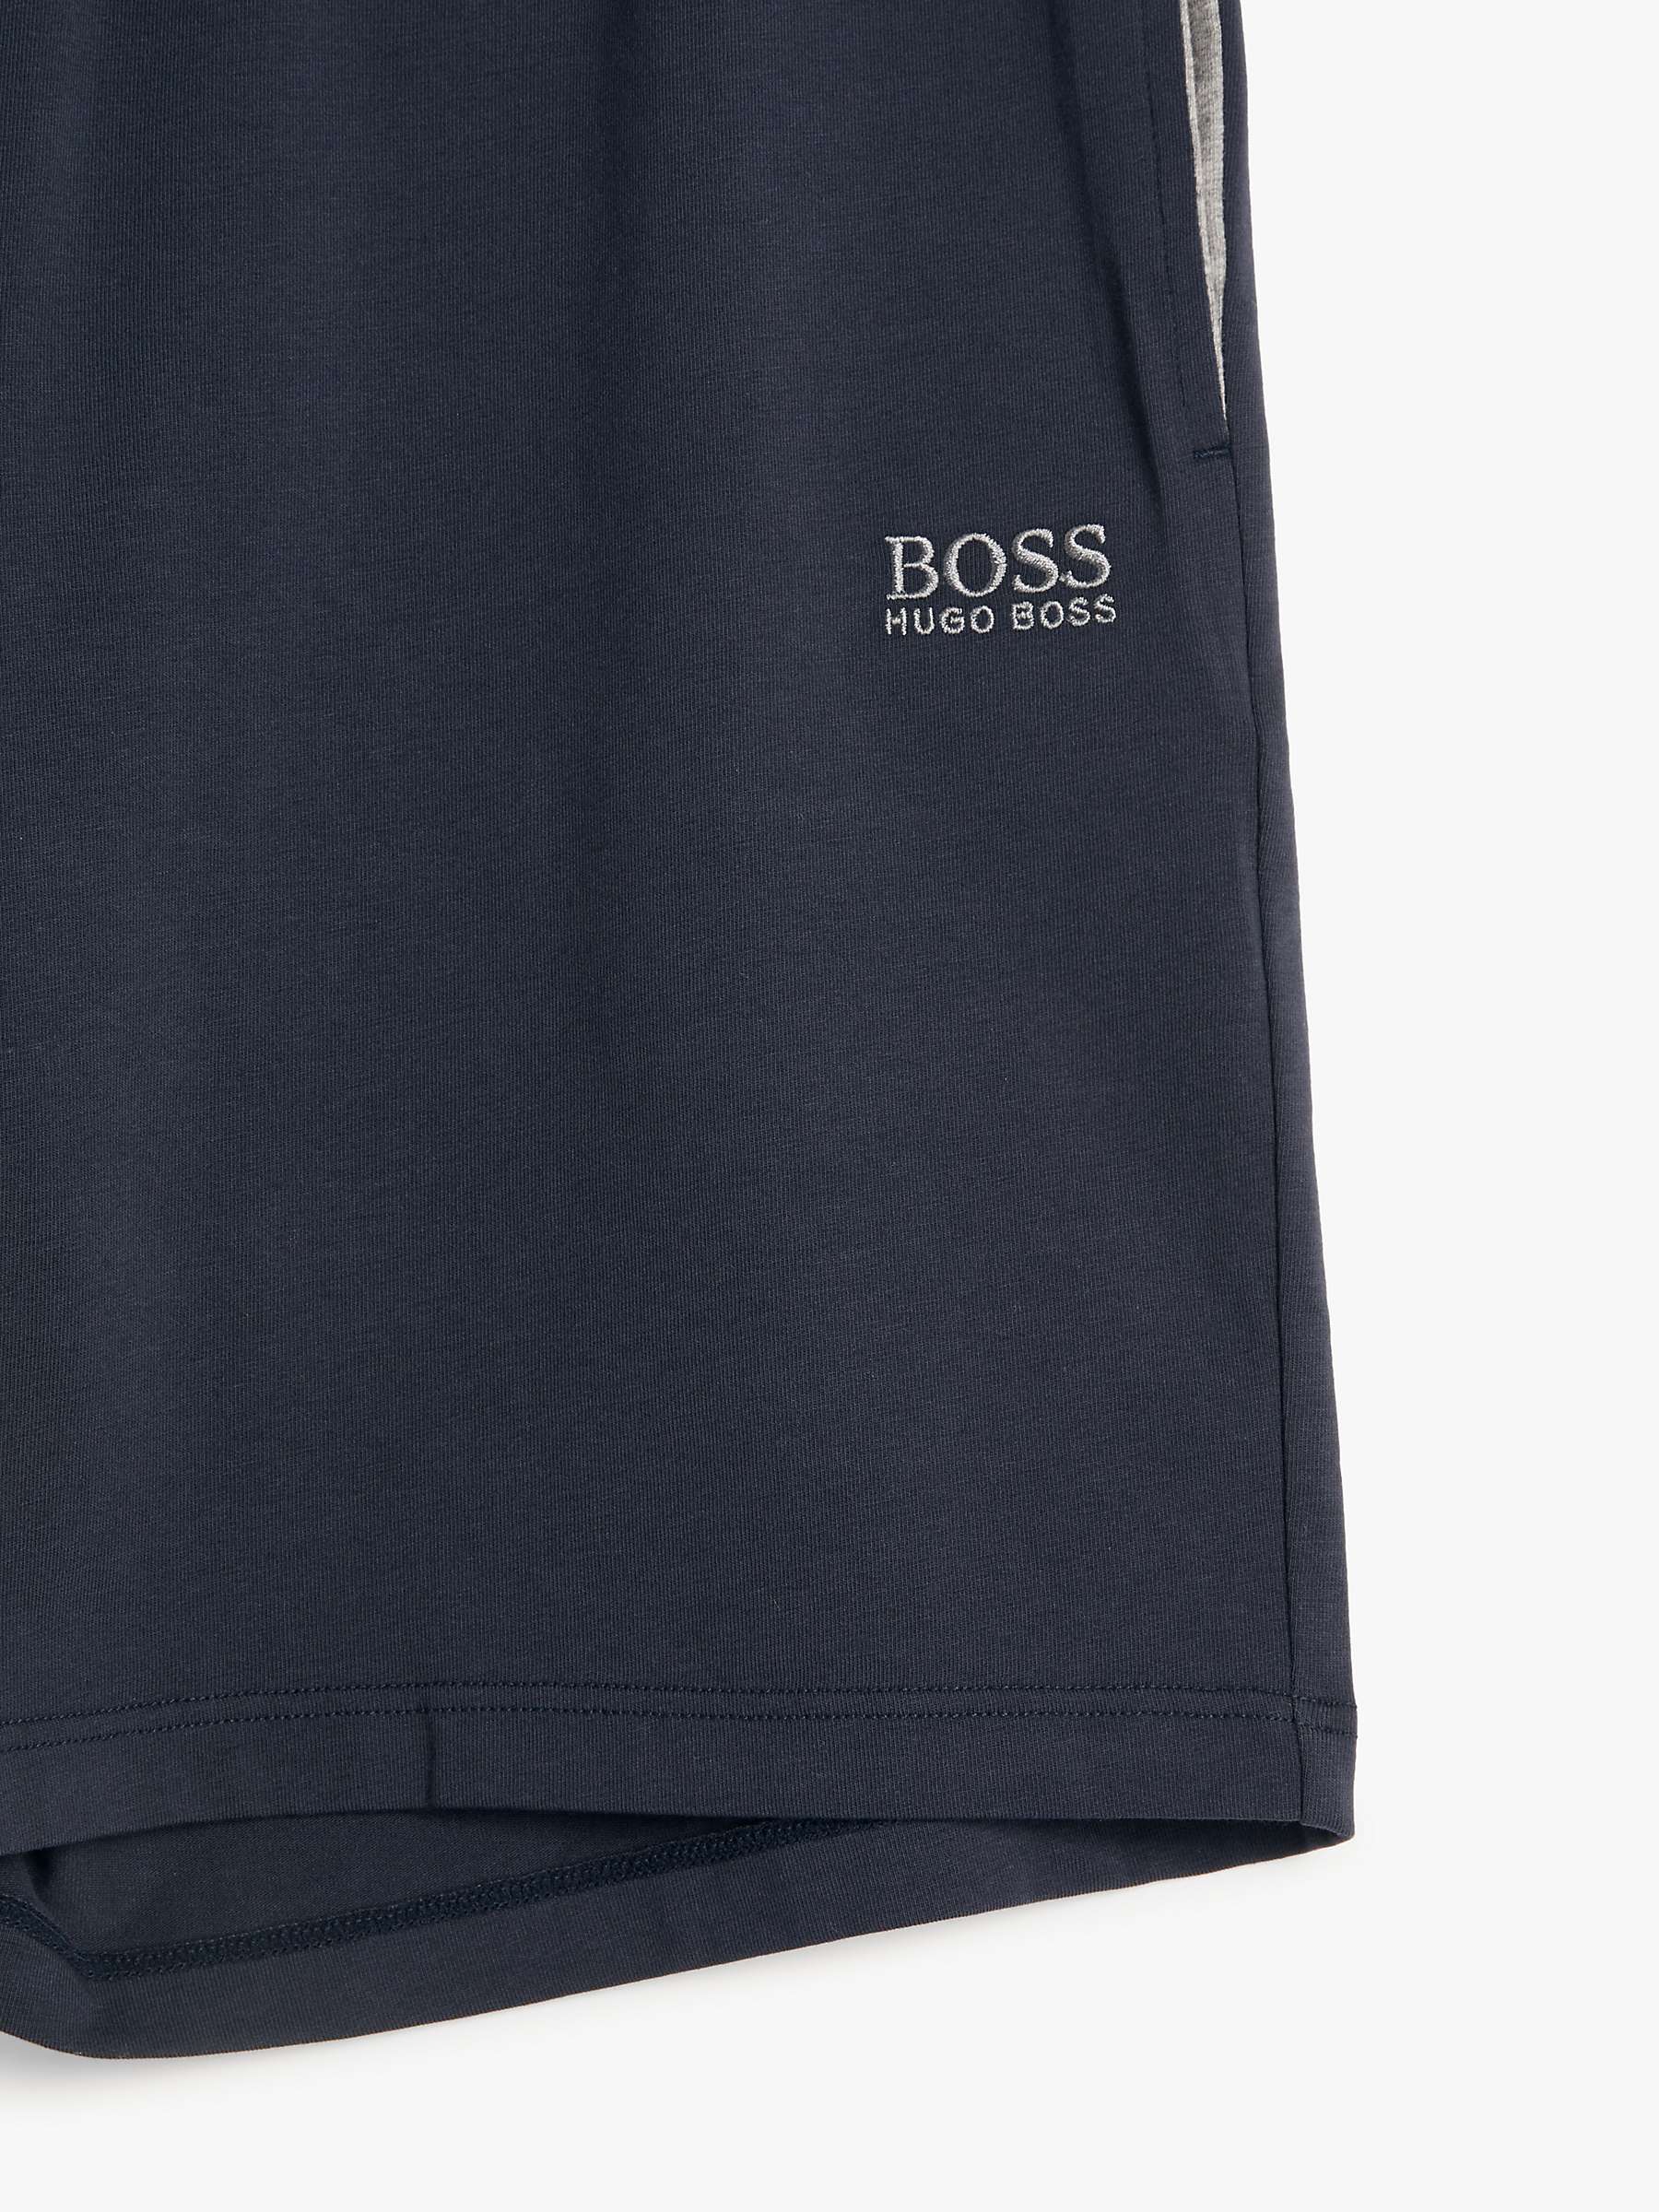 Buy BOSS Lounge Shorts, Navy Online at johnlewis.com